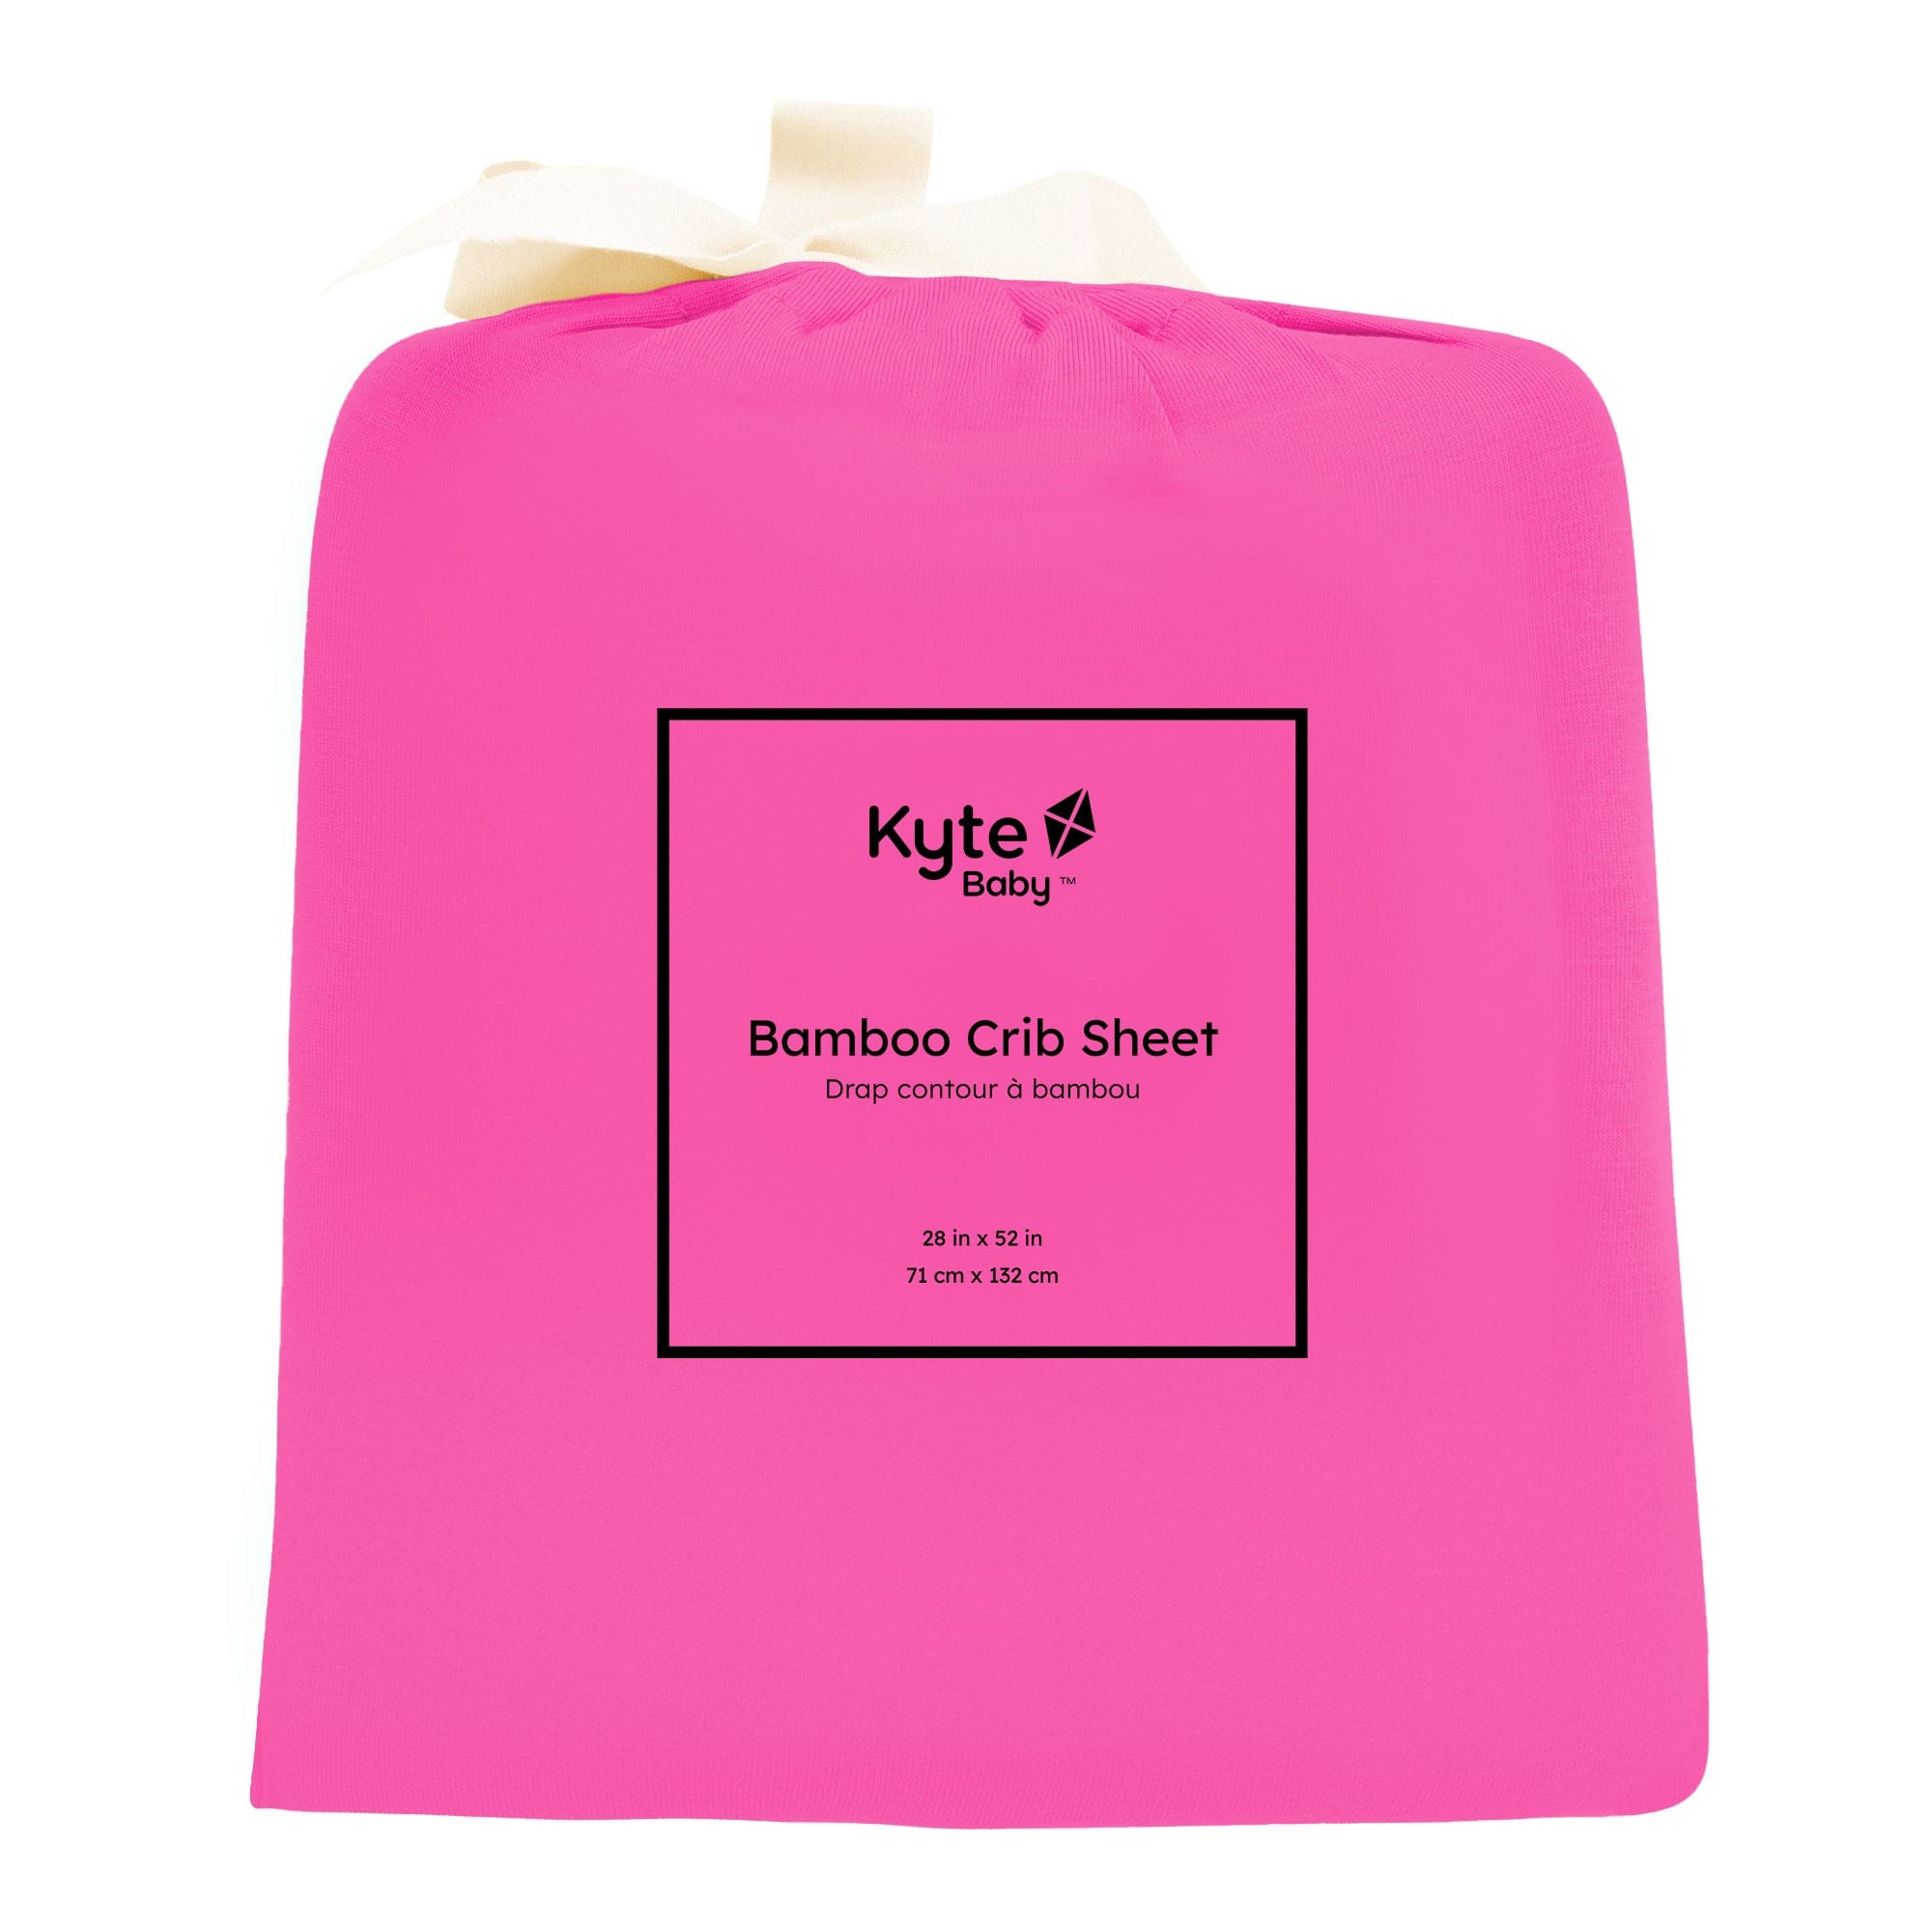 Raspberry pink Kyte Baby standard Crib Sheet in bag